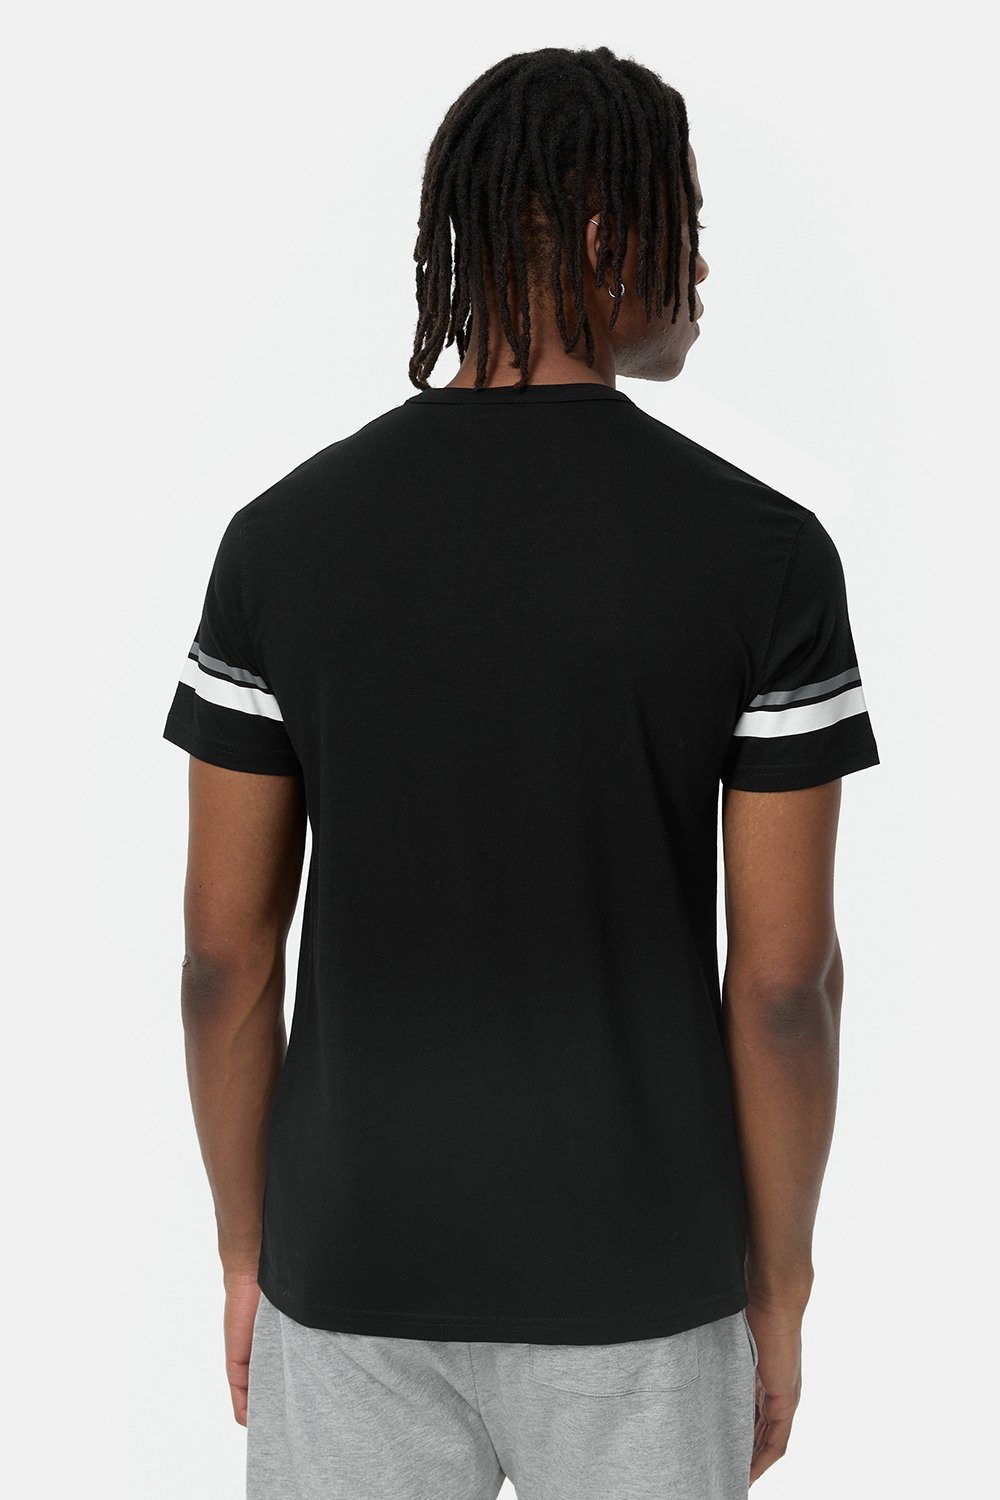 CREICH T-Shirt Lonsdale Black/White/Grey